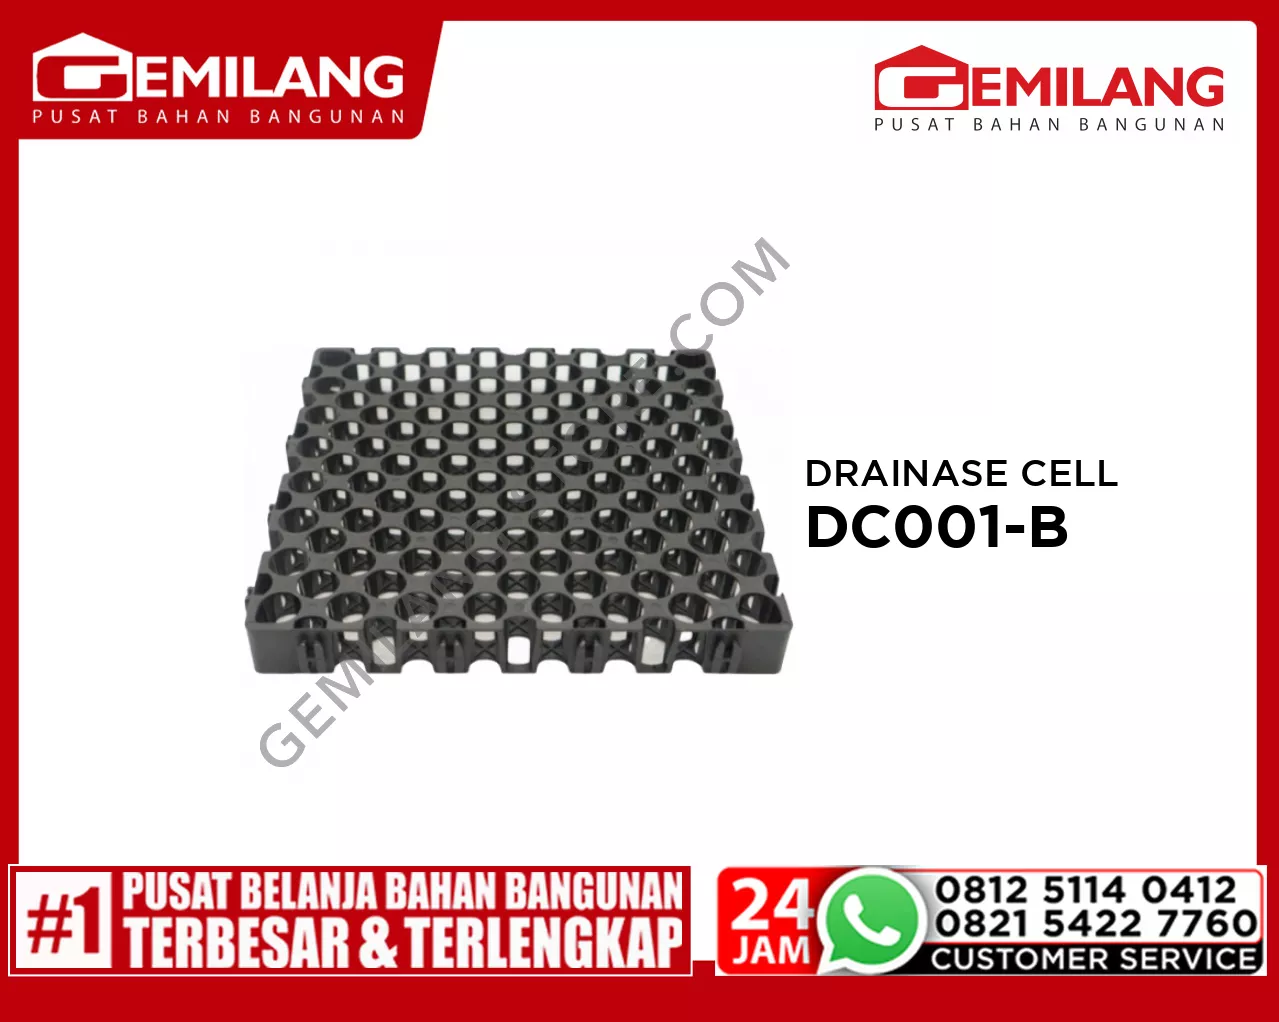 FANTASY DRAINASE CELL BLACK DC001-B